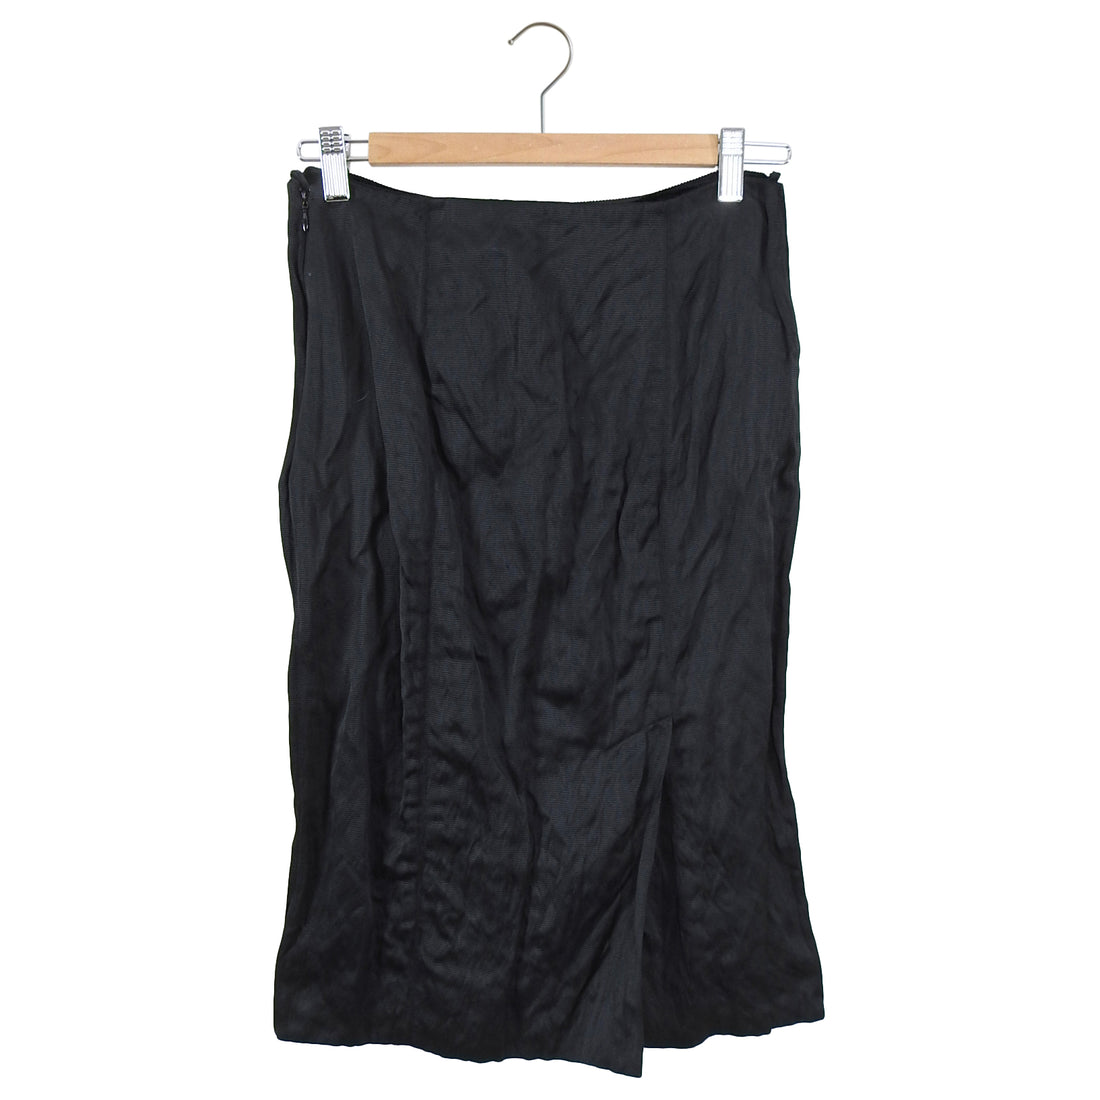 Prada Spring 2009 Black Minimal Wrinkle Pencil Skirt - IT40 / 4